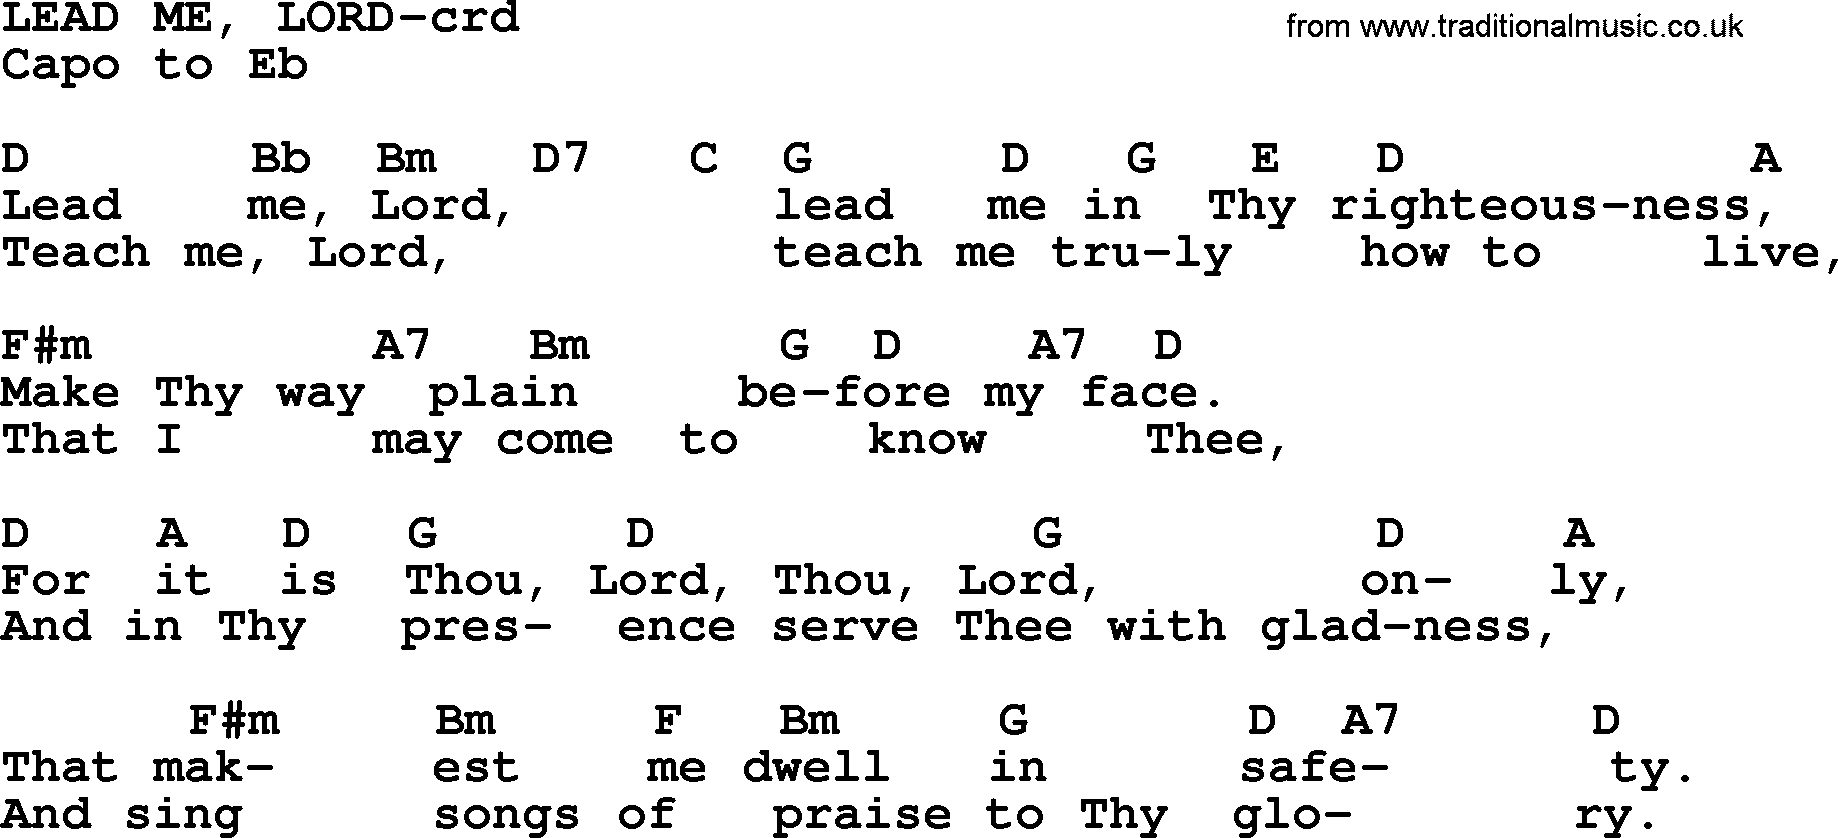 Top 500 Hymn: Lead Me, Lord, lyrics and chords